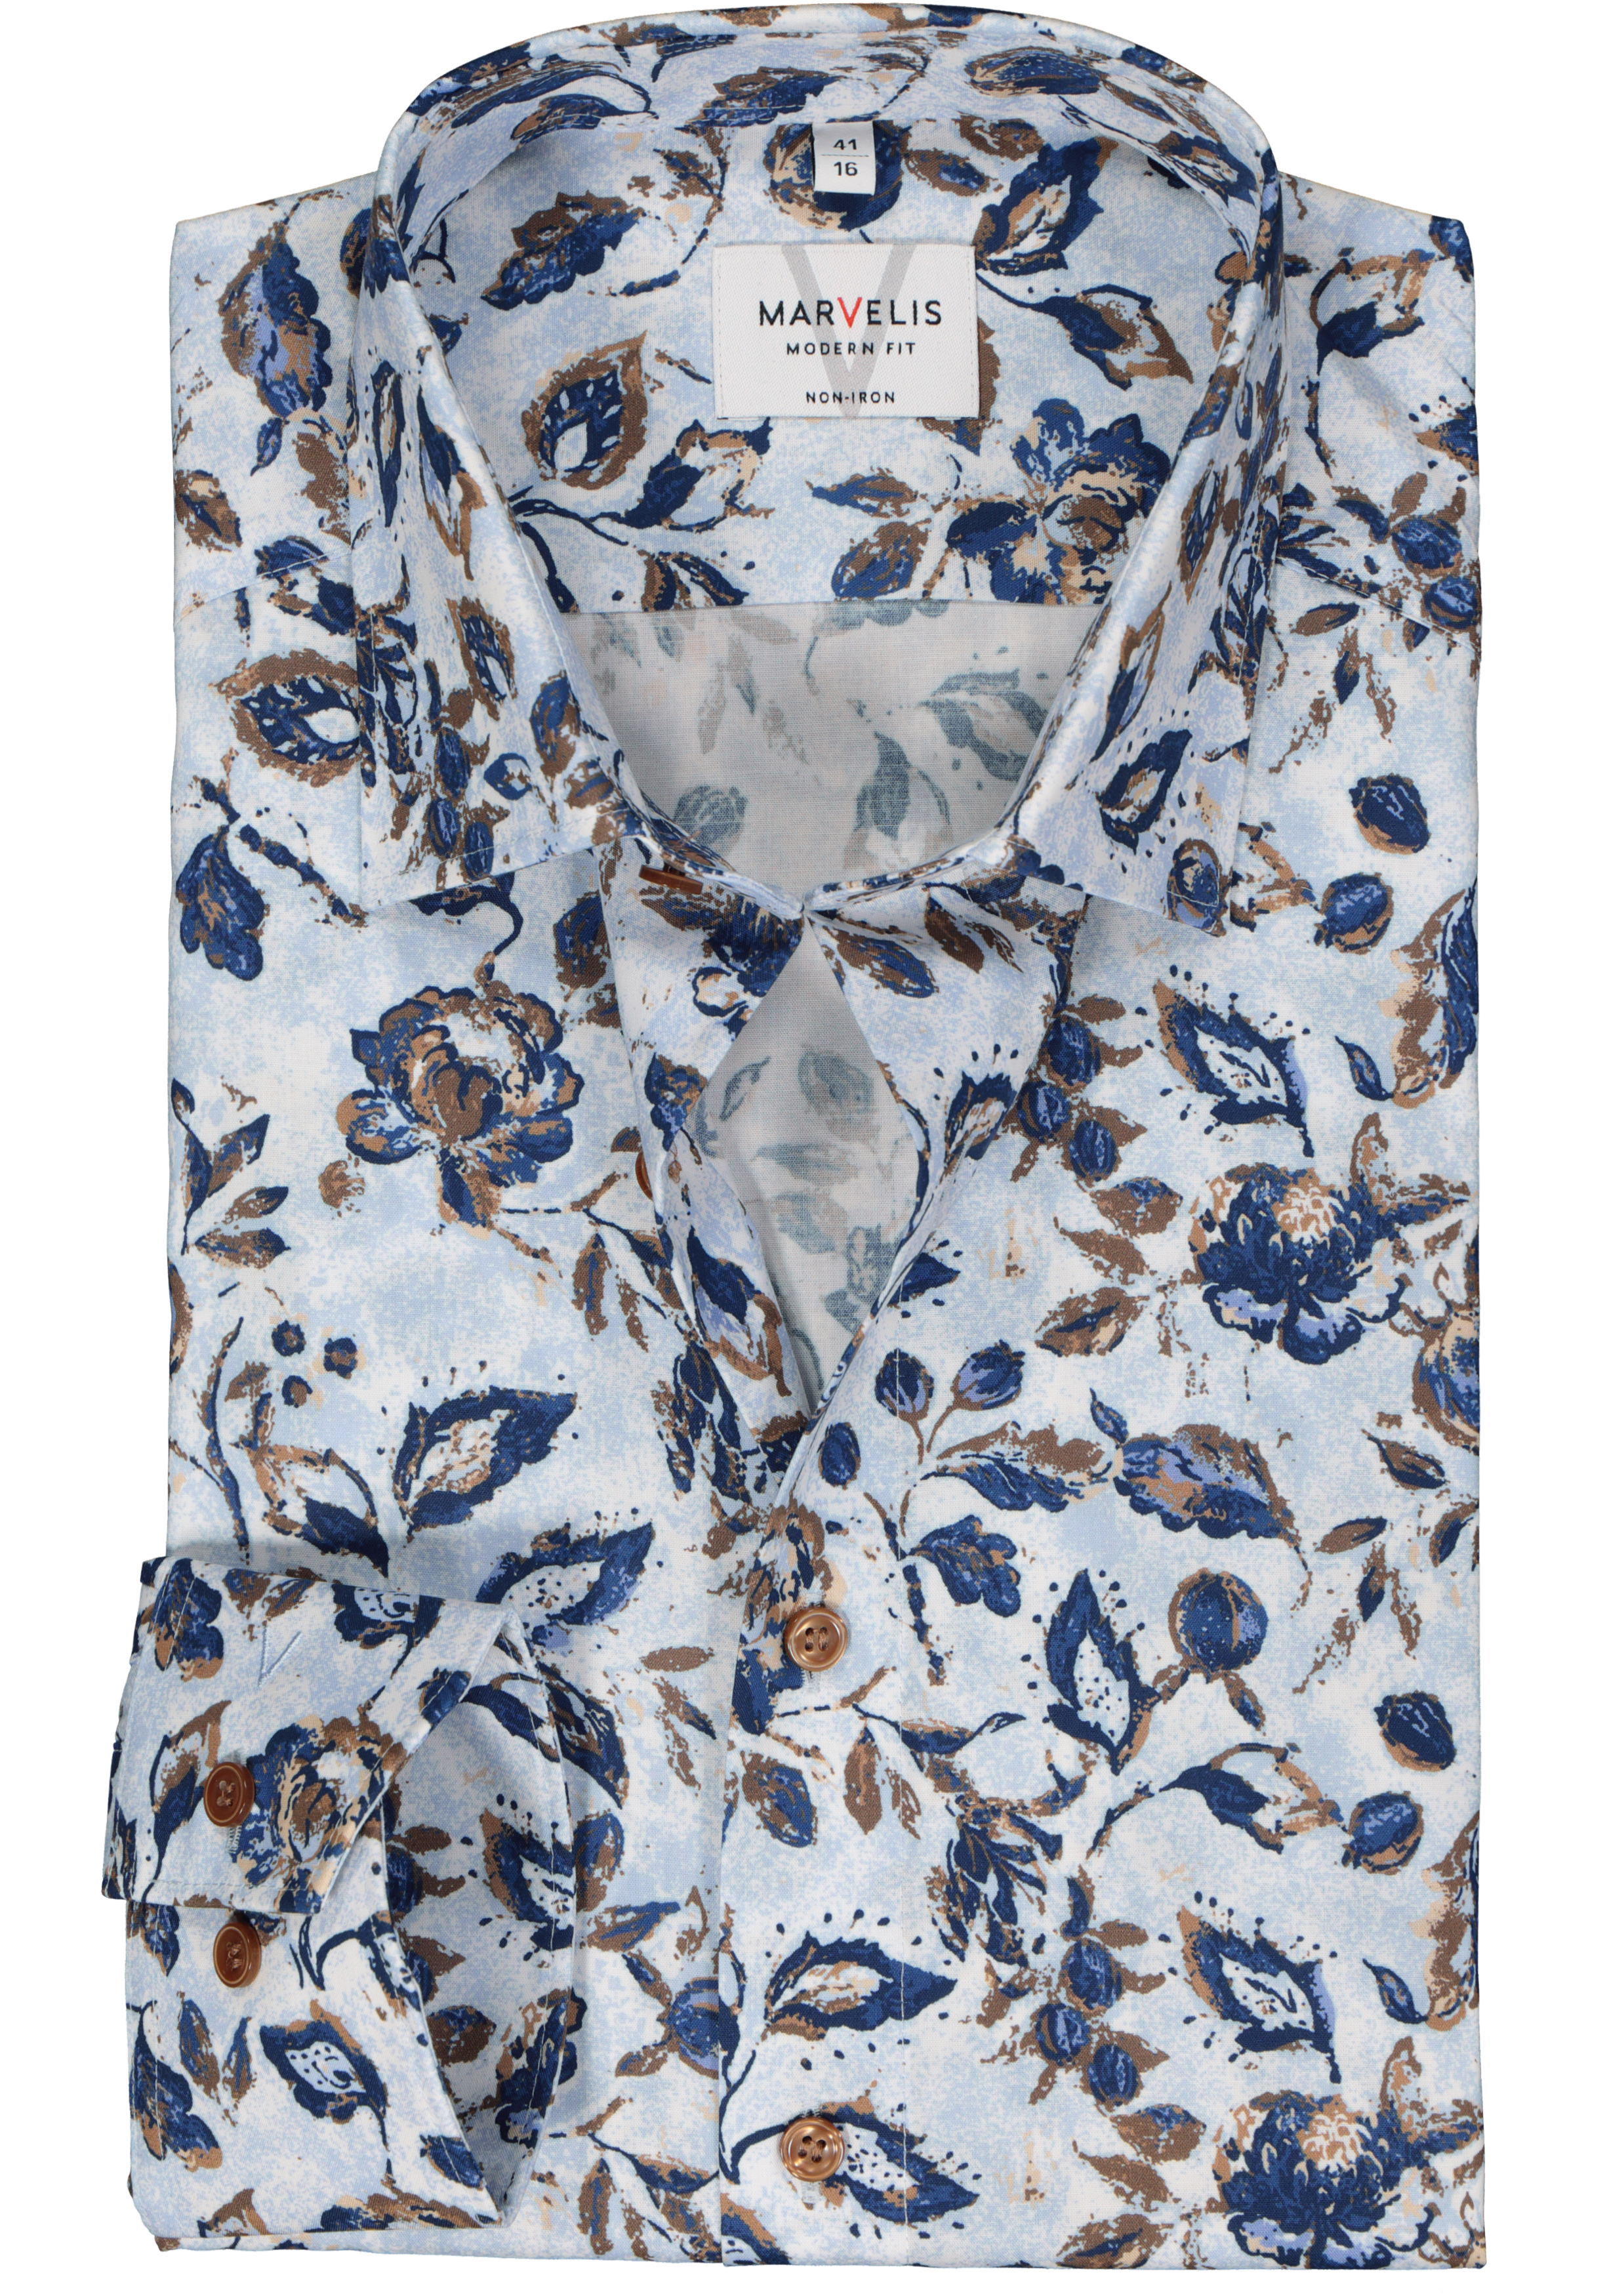 MARVELIS modern fit overhemd, mouwlengte 7, popeline, lichtblauw met beige en donkerblauw dessin